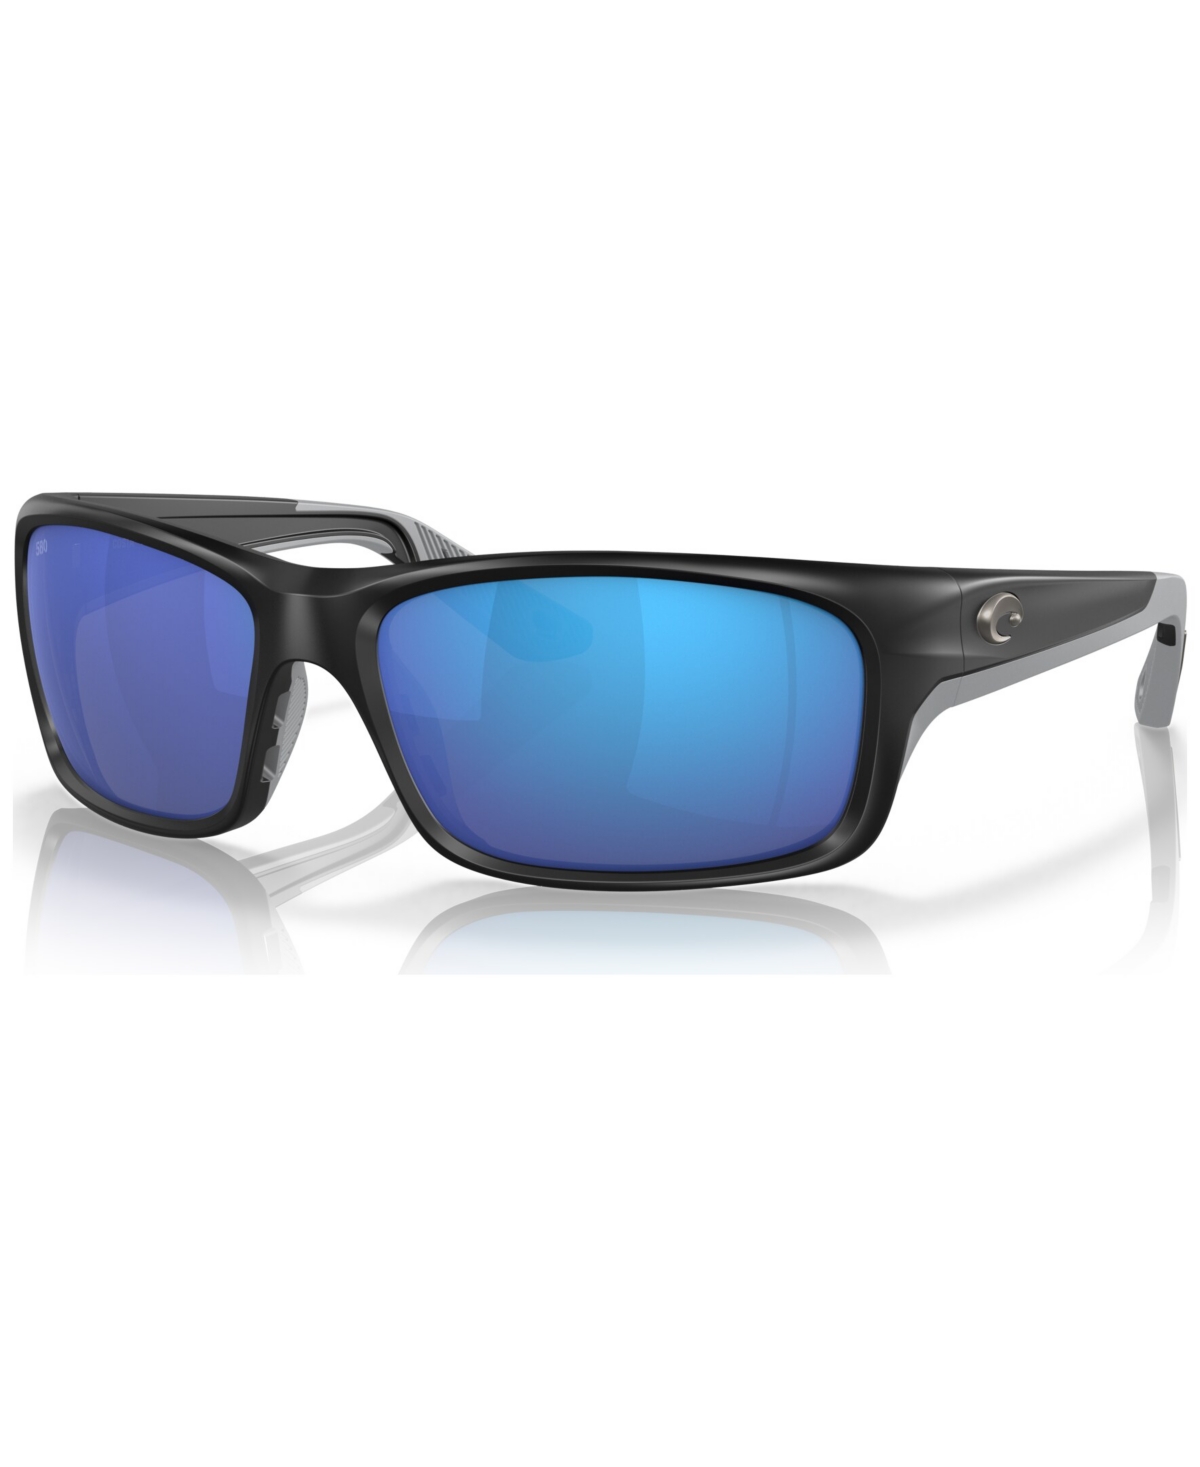 Men's Polarized Sunglasses, 6S9106-01 - Matte Black